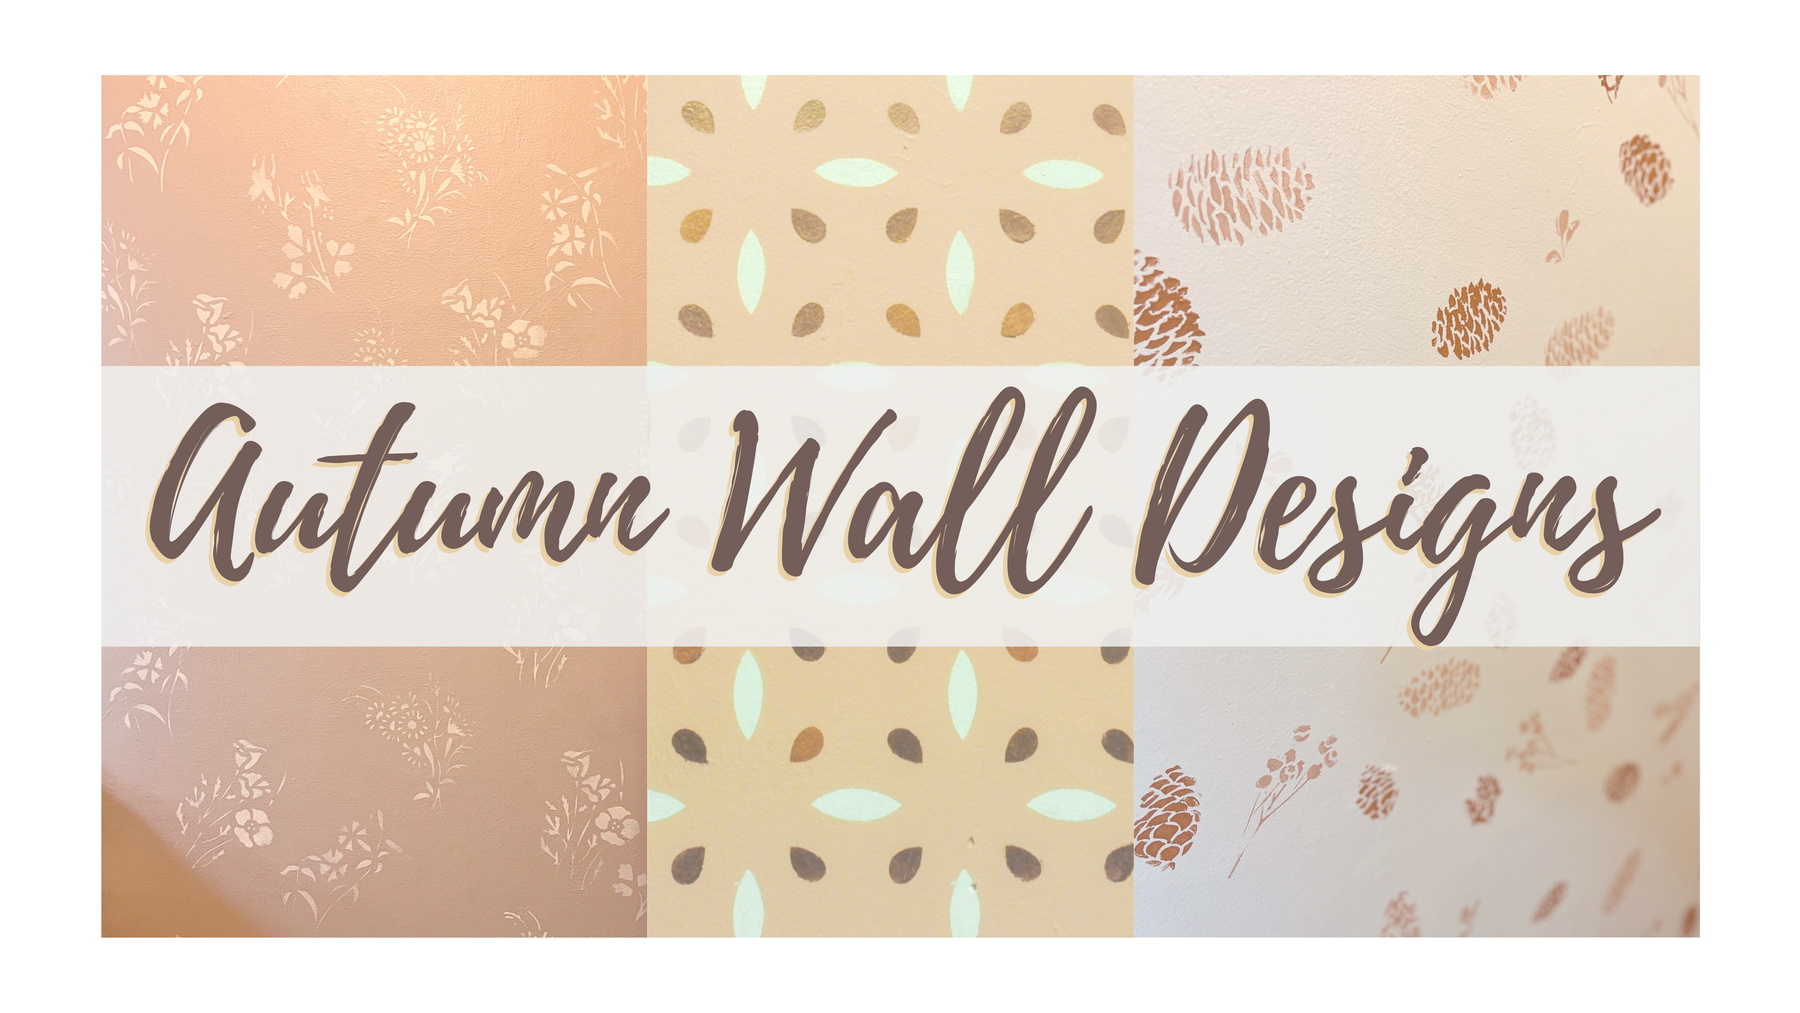 4 Autumn Stenciled Wall Designs